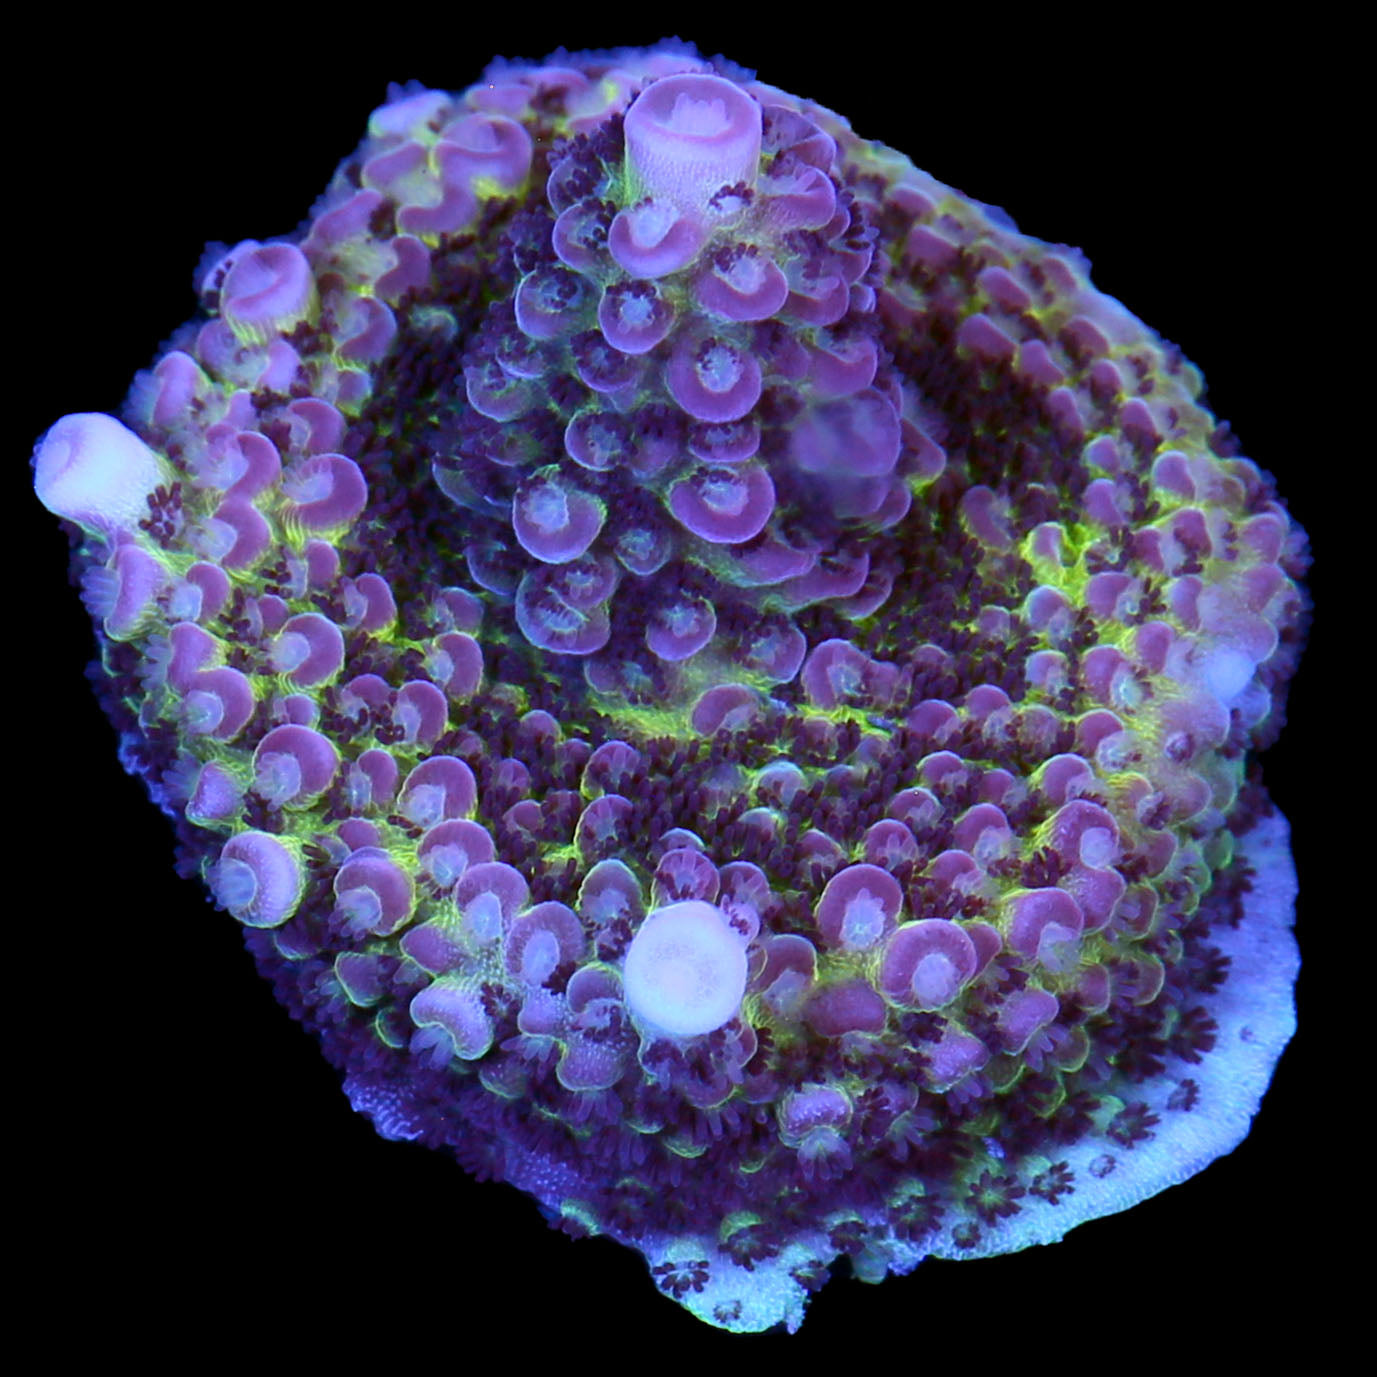 Festive Acropora Coral